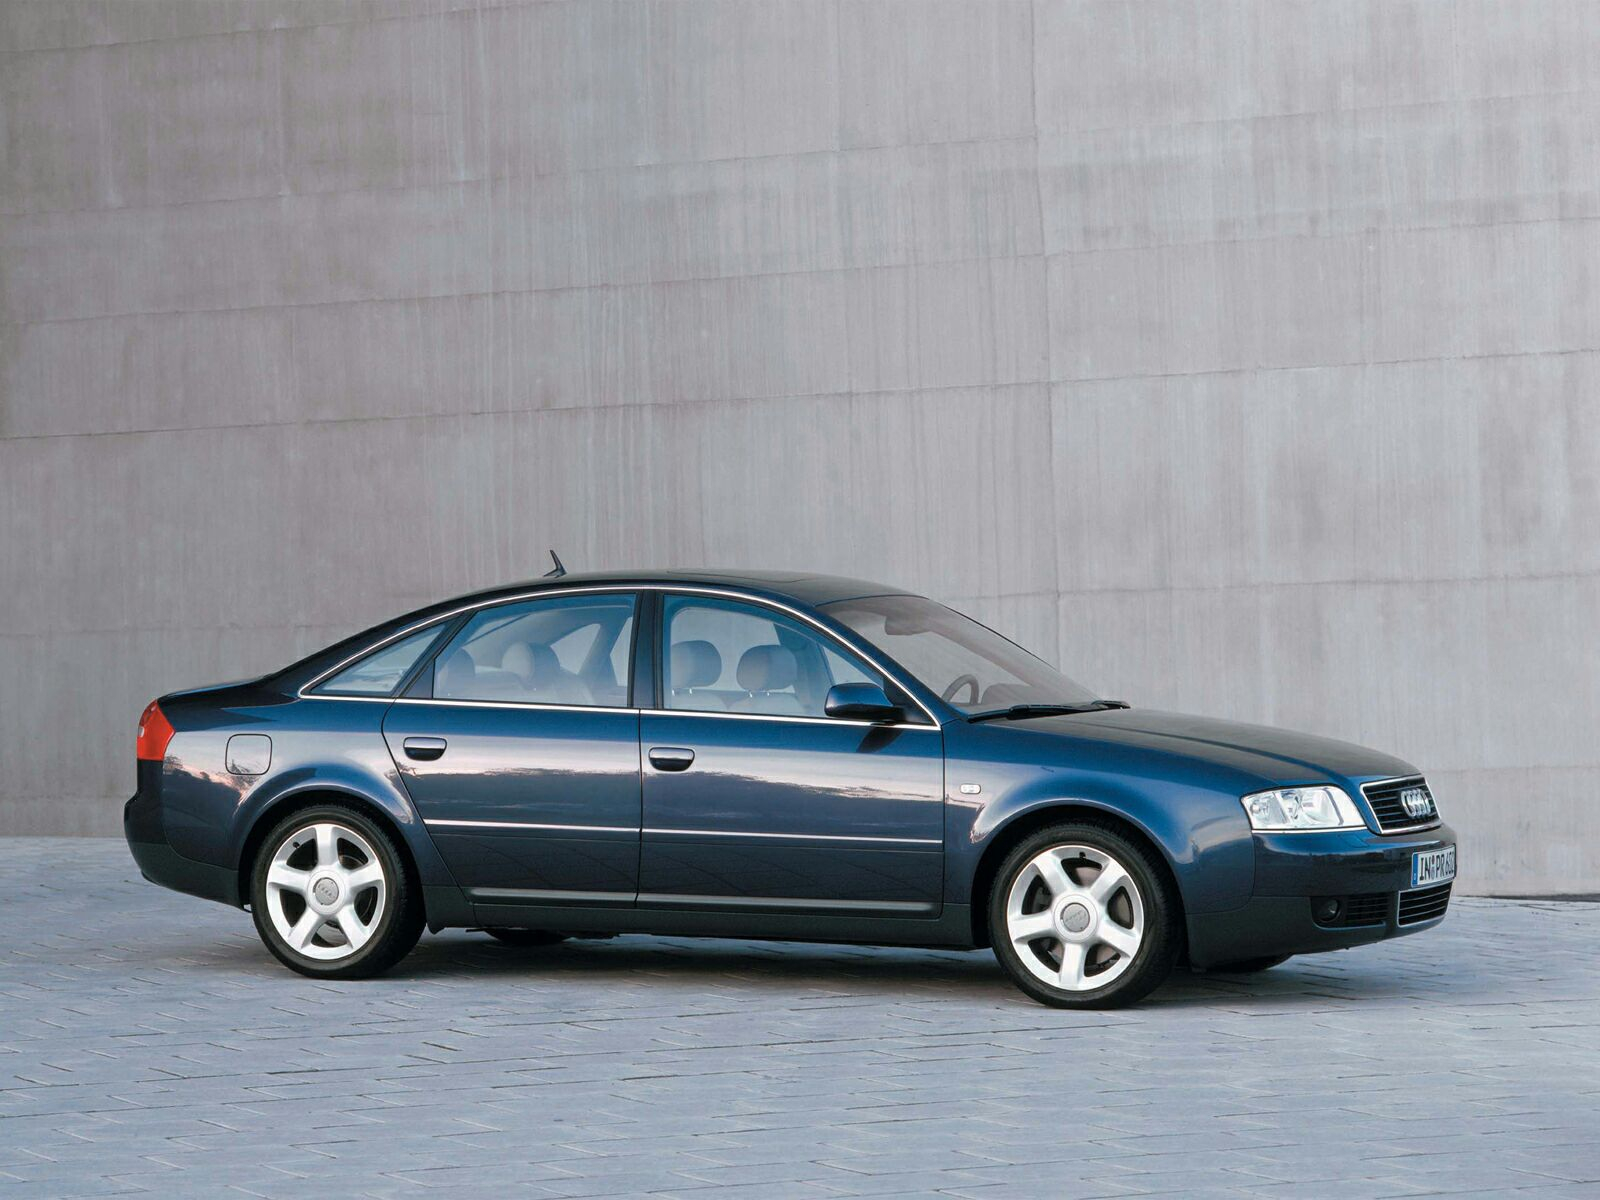 Ауди а6 с5 2001 год. Audi a6 [c5] 1997-2004. Ауди а6 седан 2001. Audi a6 c5 2001. Audi a6 c5 (2001-2004).